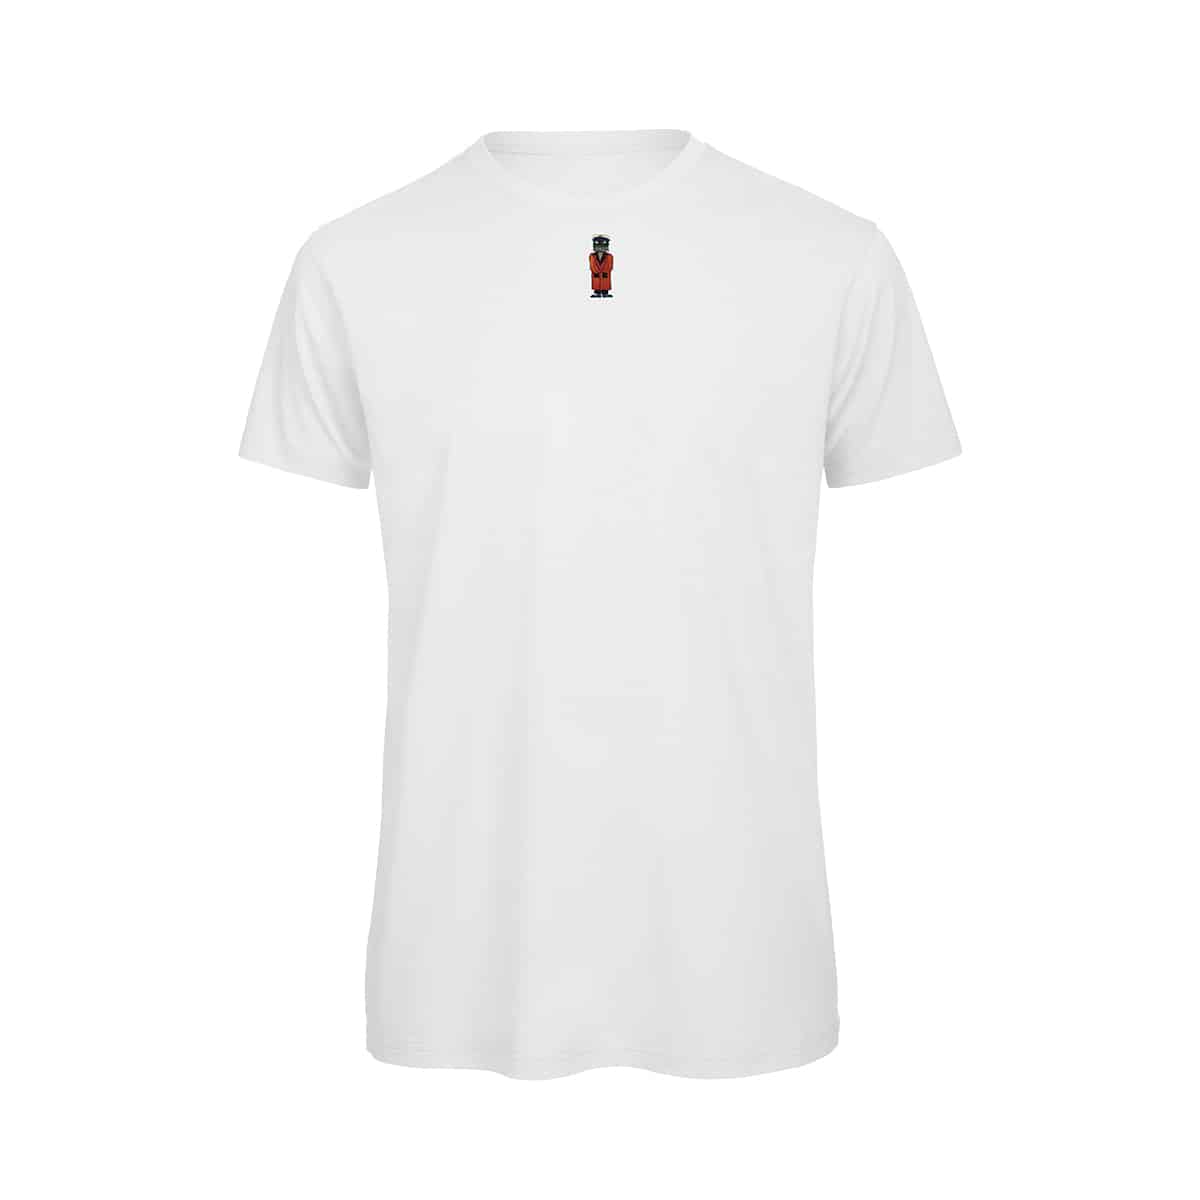 Frank Willems - Longfit T-shirt - Little Hugh - WHT